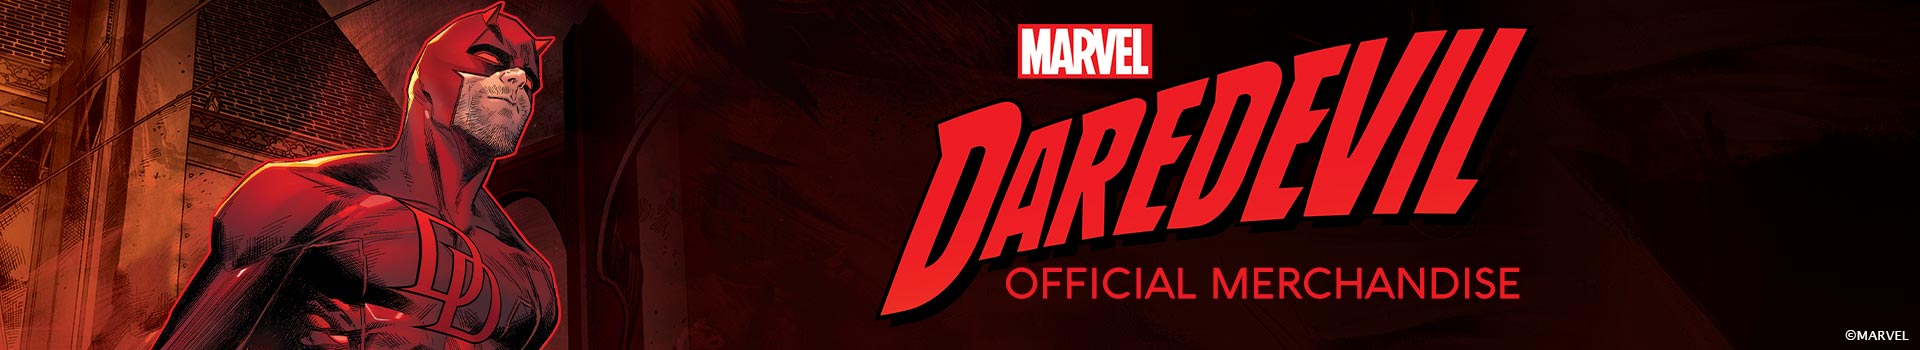 Daredevil Official Merchandise